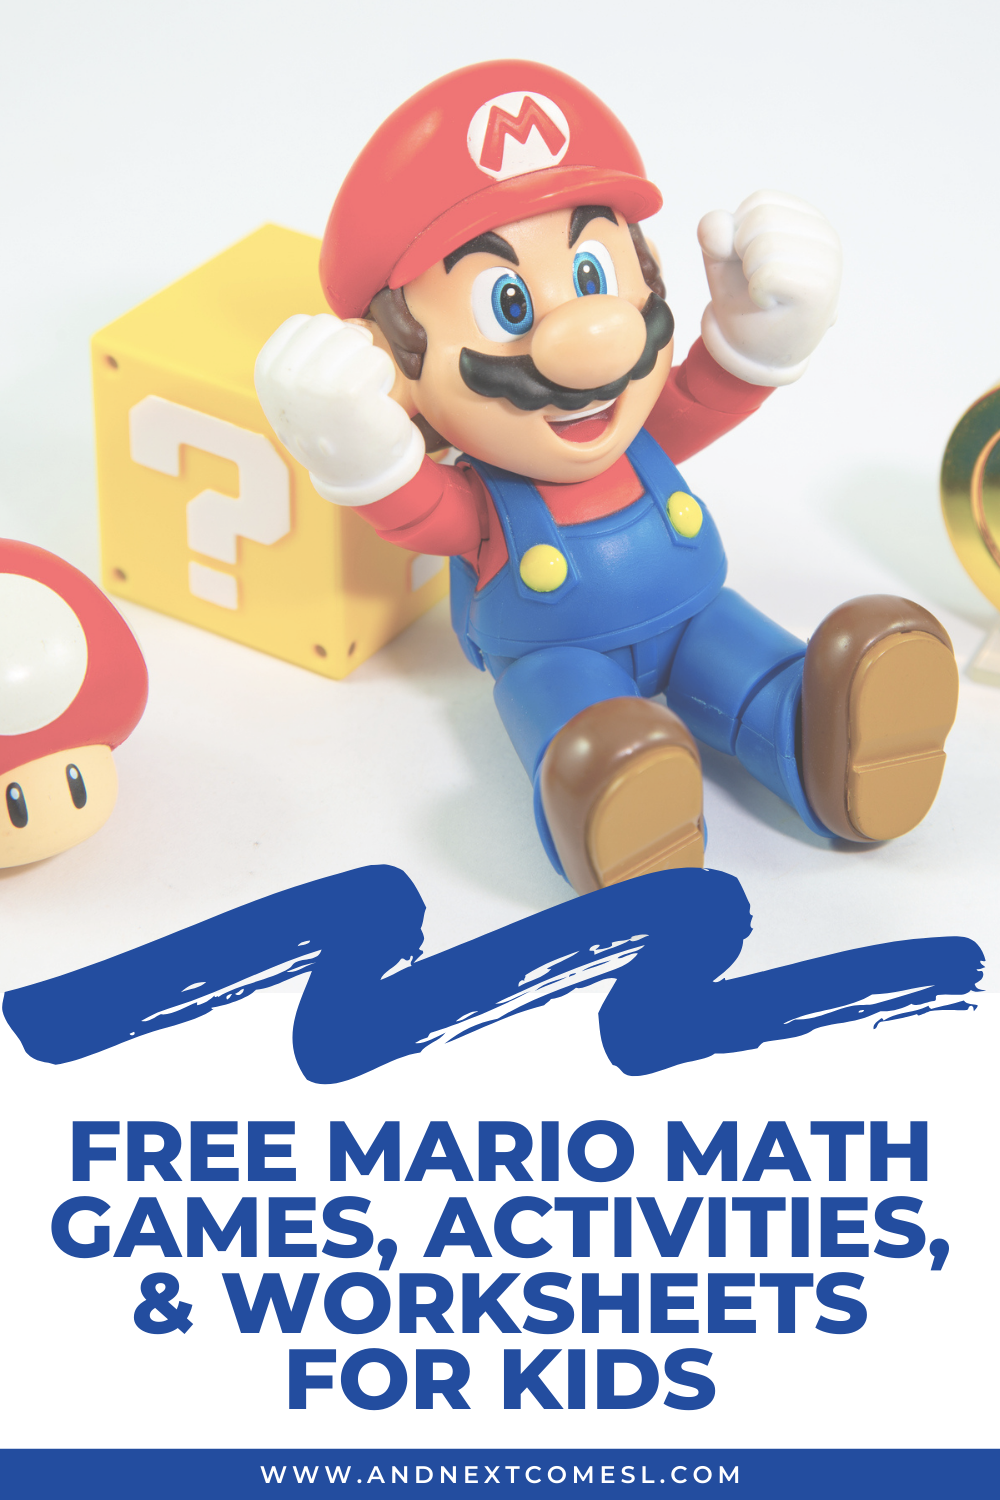 Mario math games, activities, & worksheets for kids